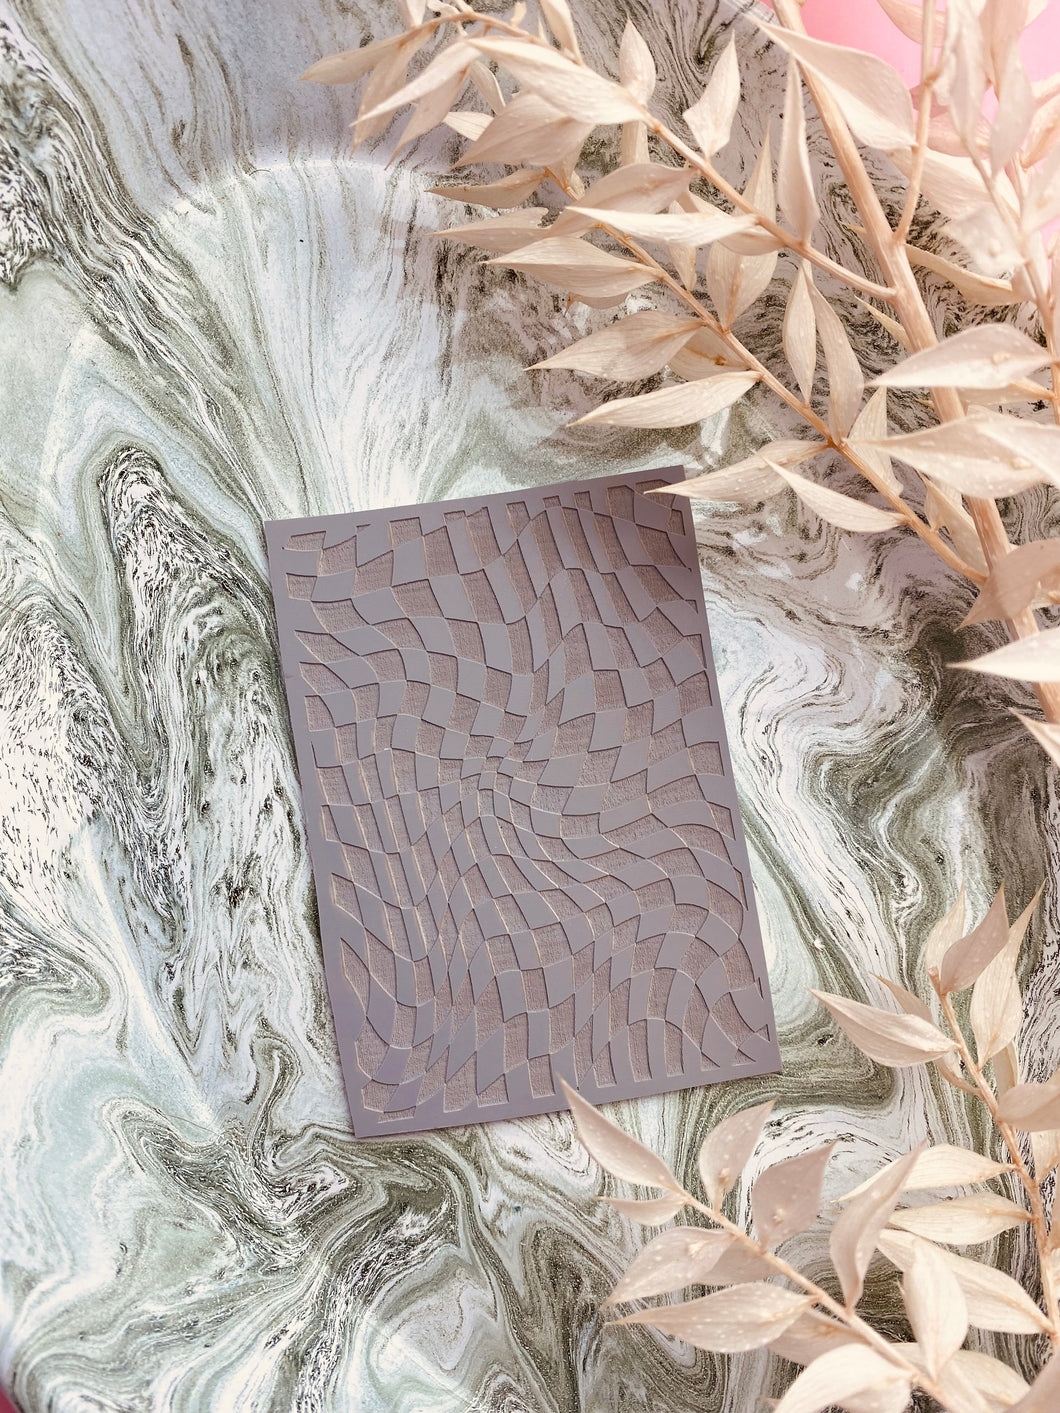 Wavy chequerboard rubber texture mat